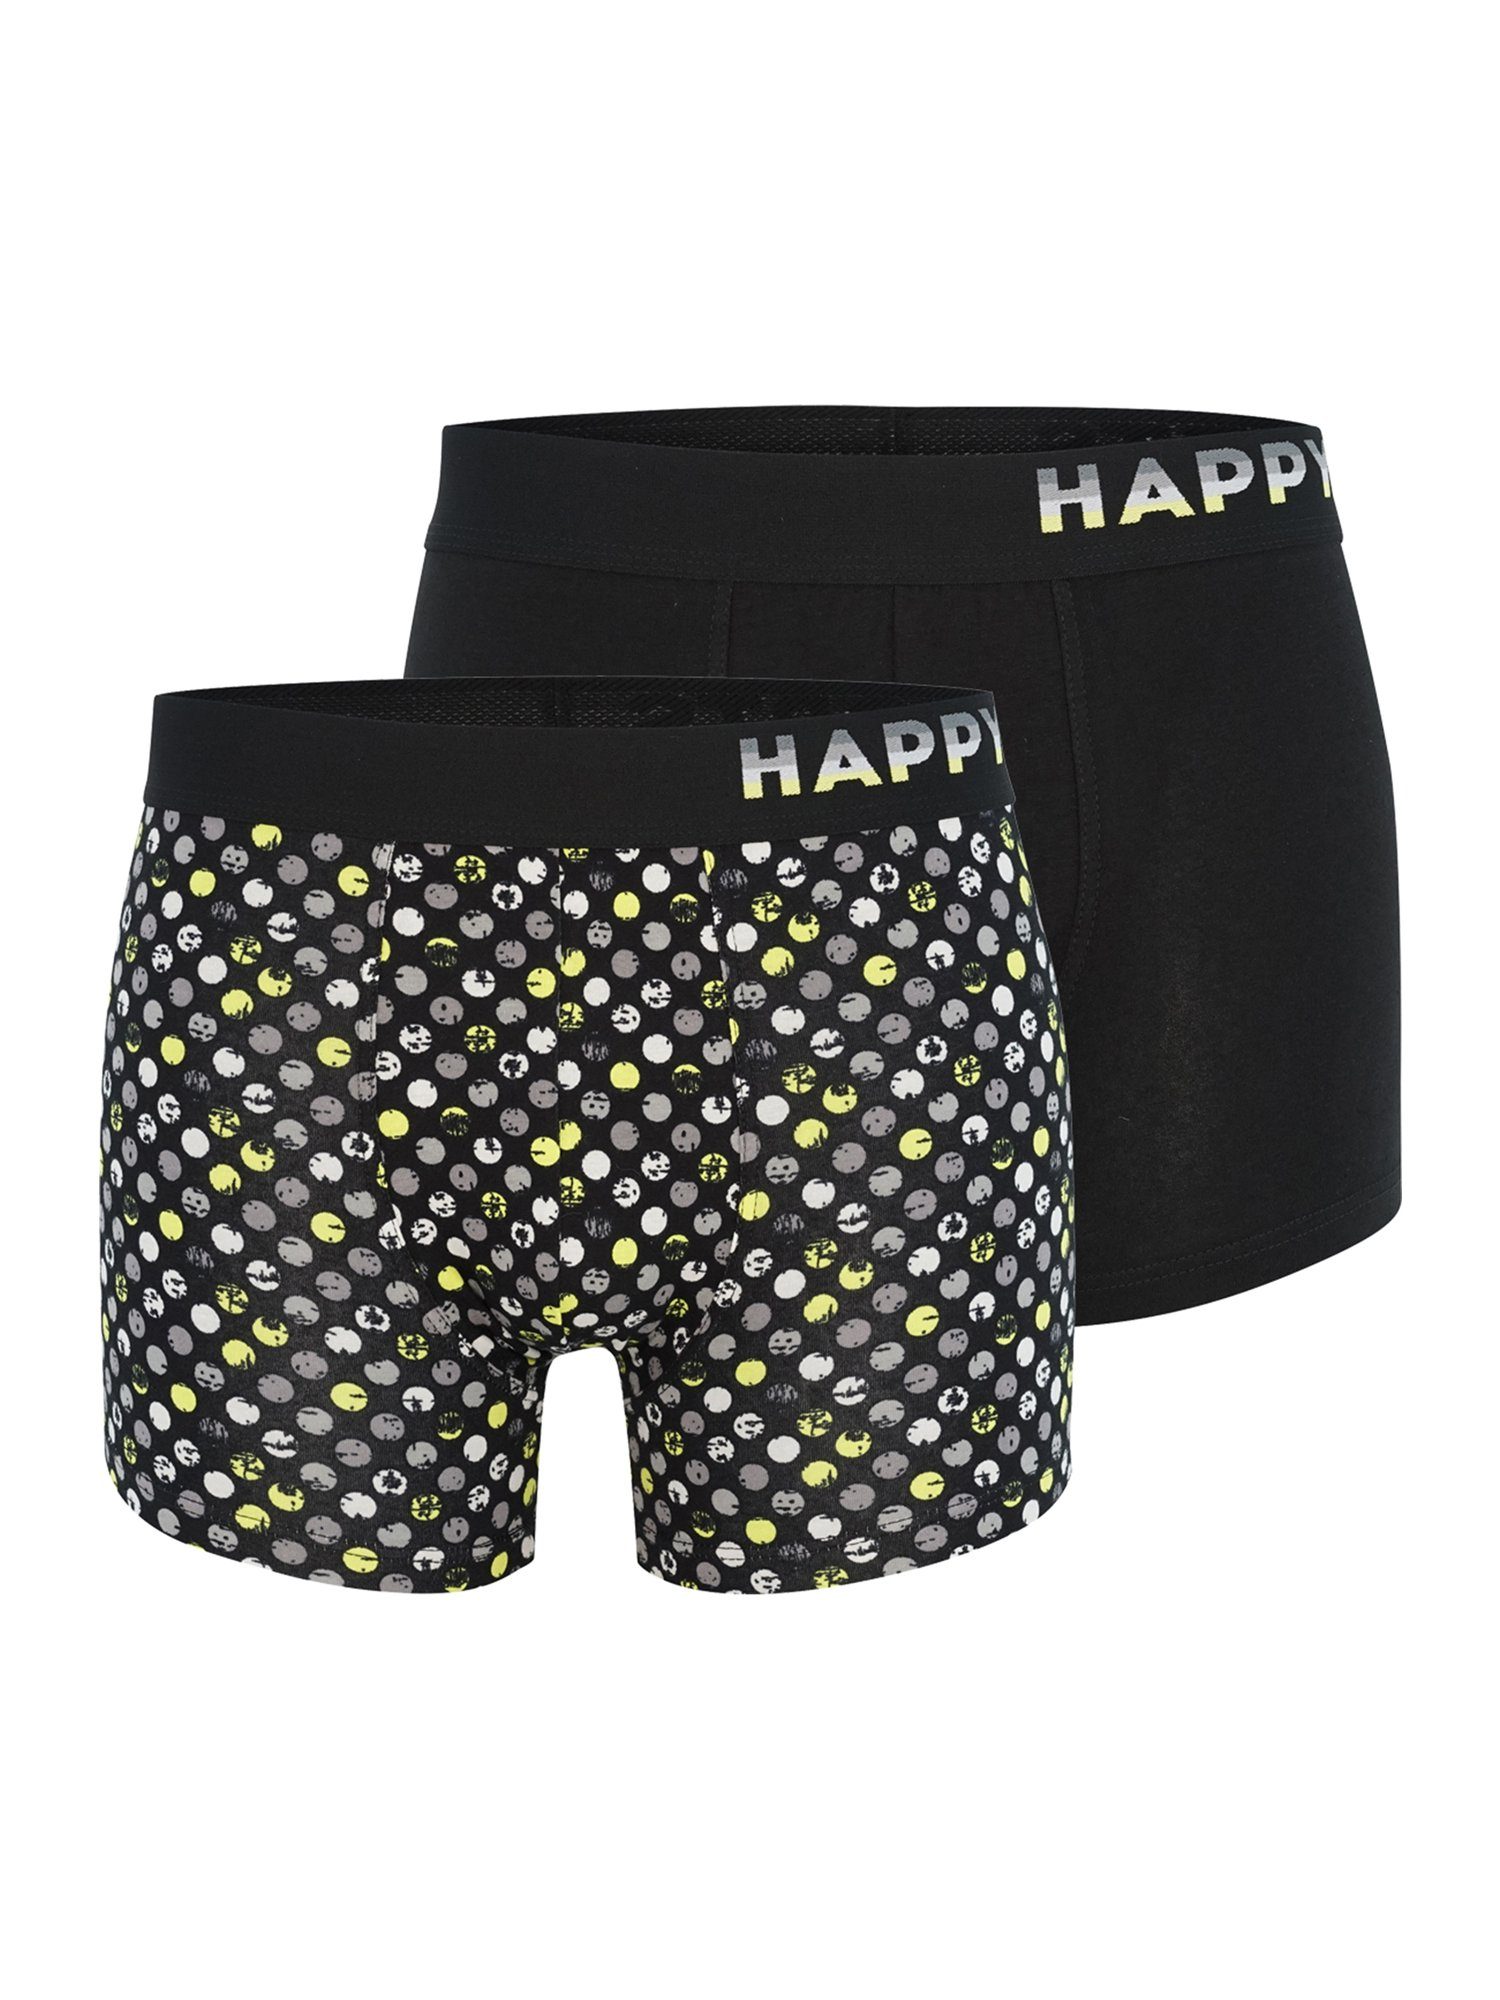 HAPPY Motivprint SHORTS Polka Neon Pants Trunks Retro